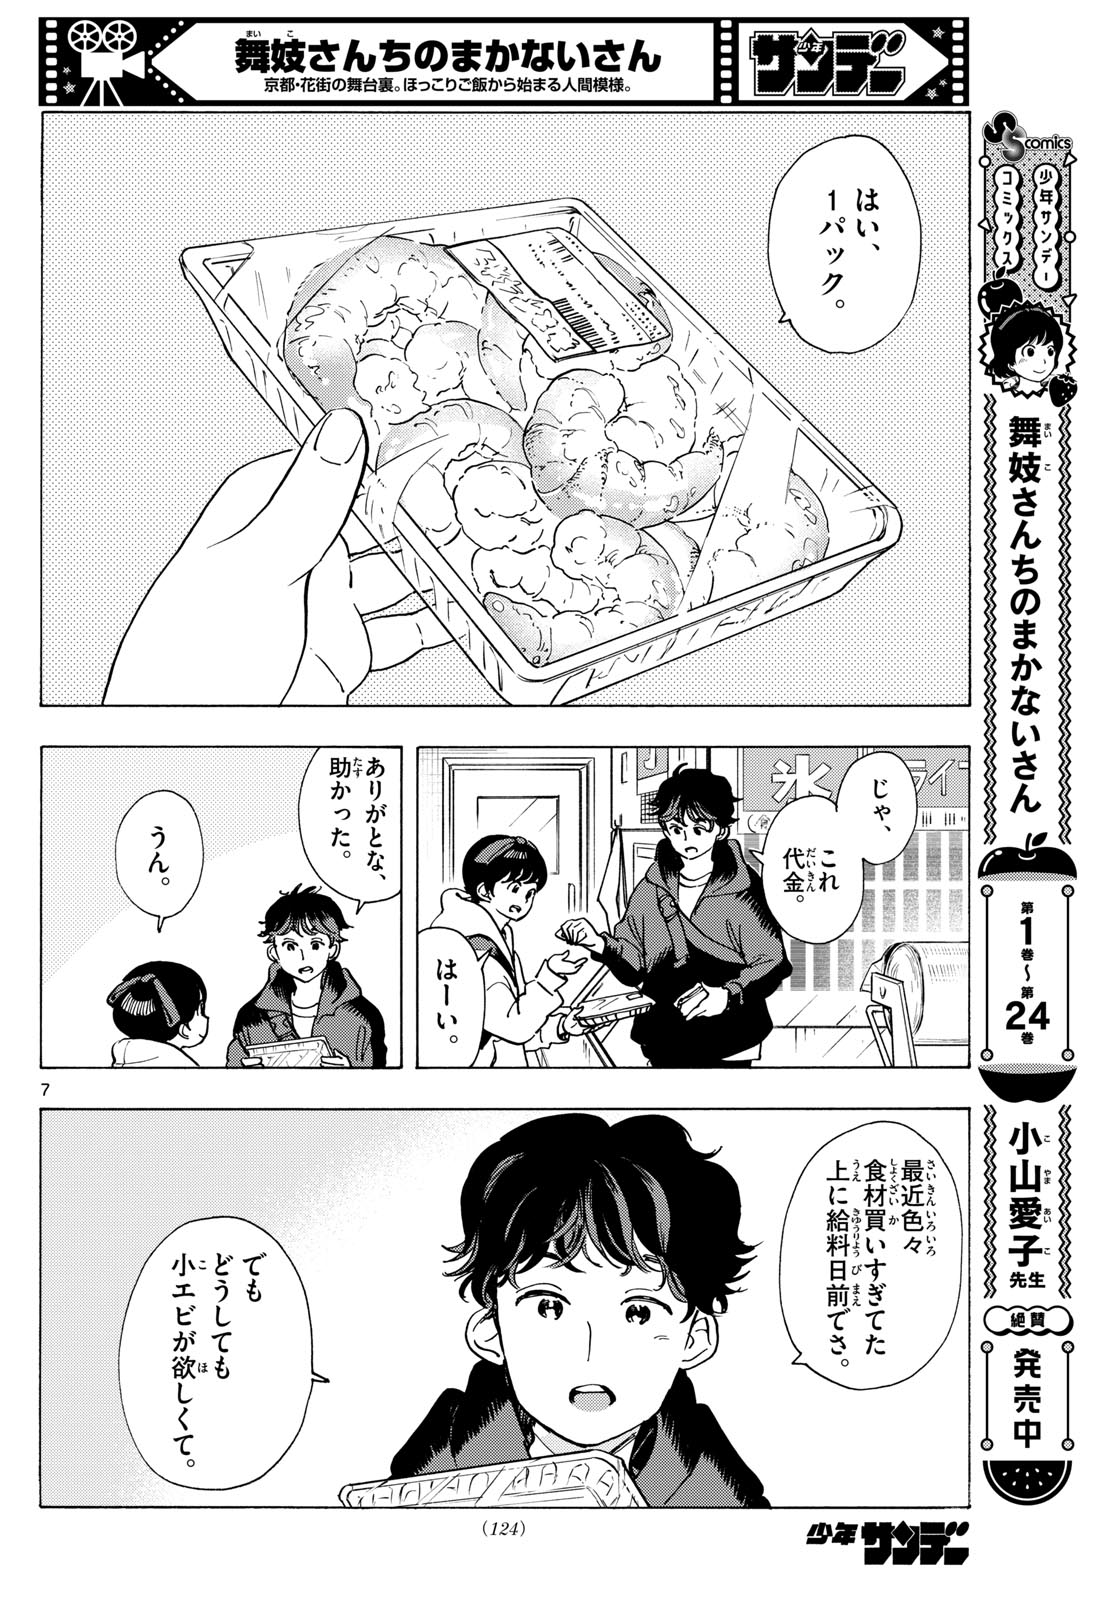 Maiko-san Chi no Makanai-san - Chapter 287 - Page 8